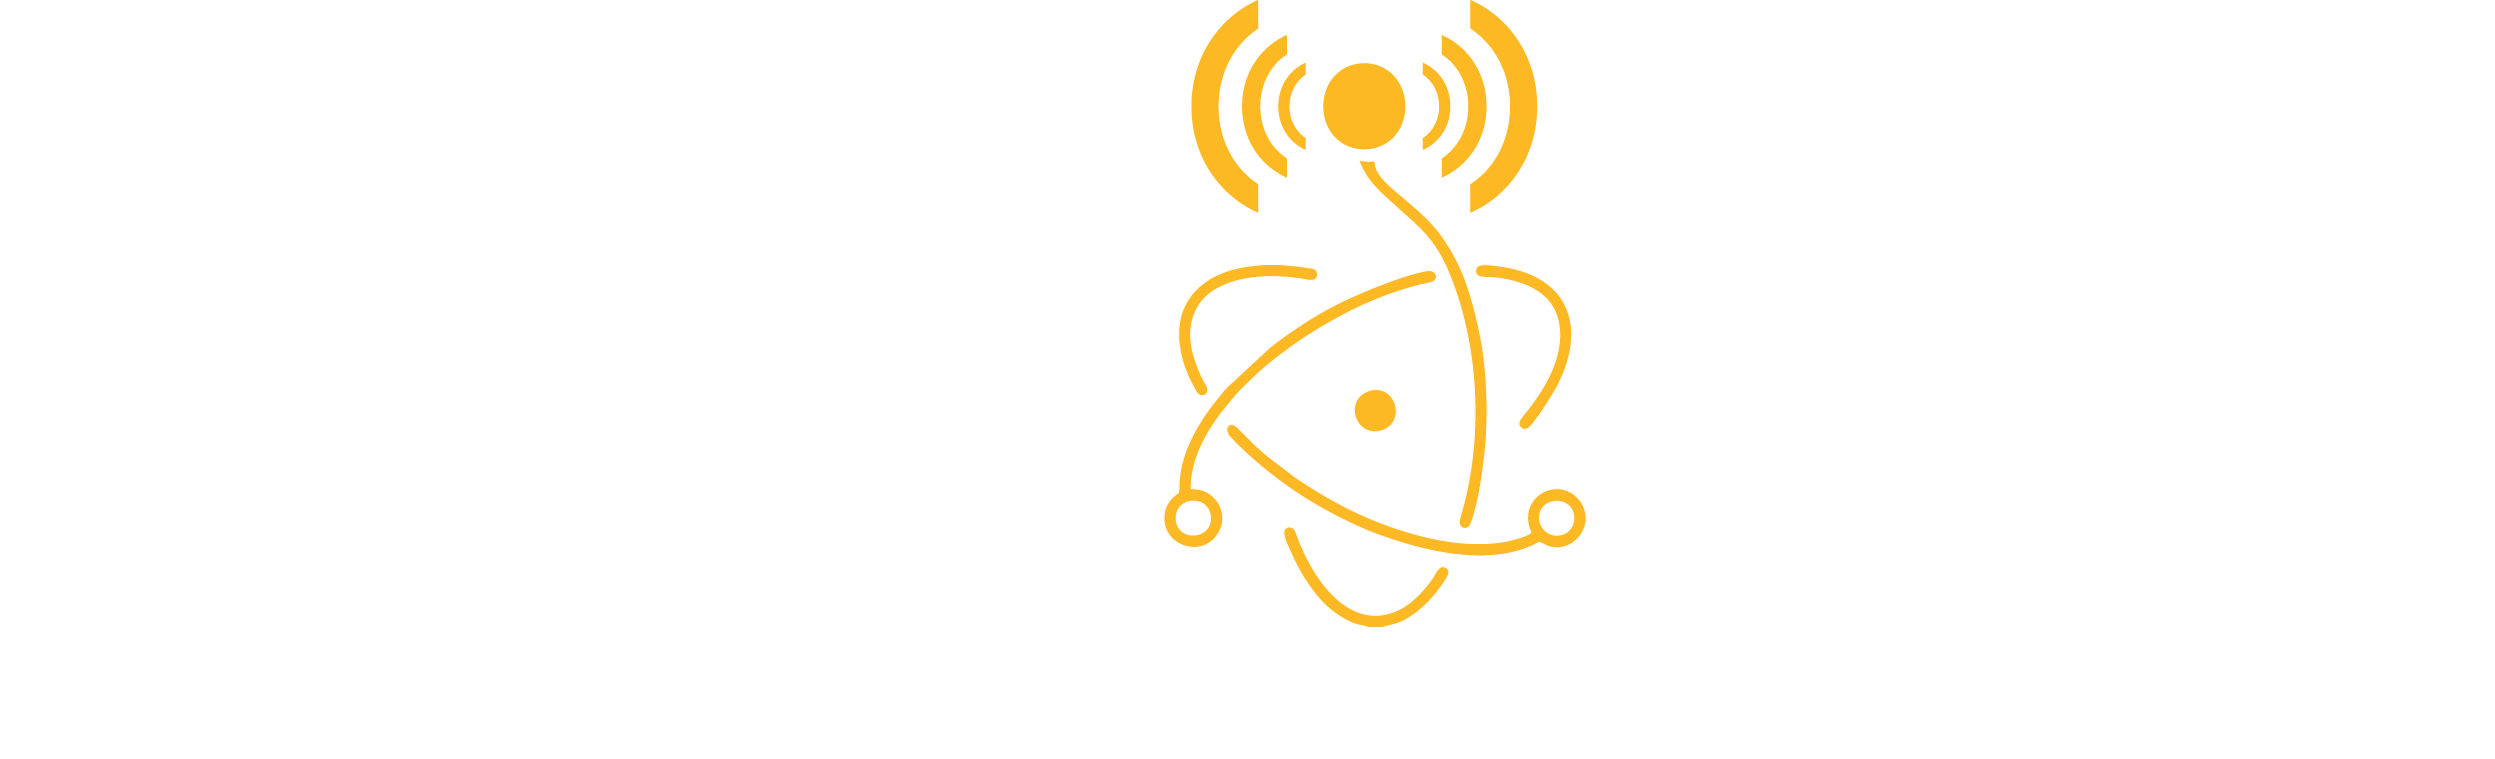 Radio Spin Logo